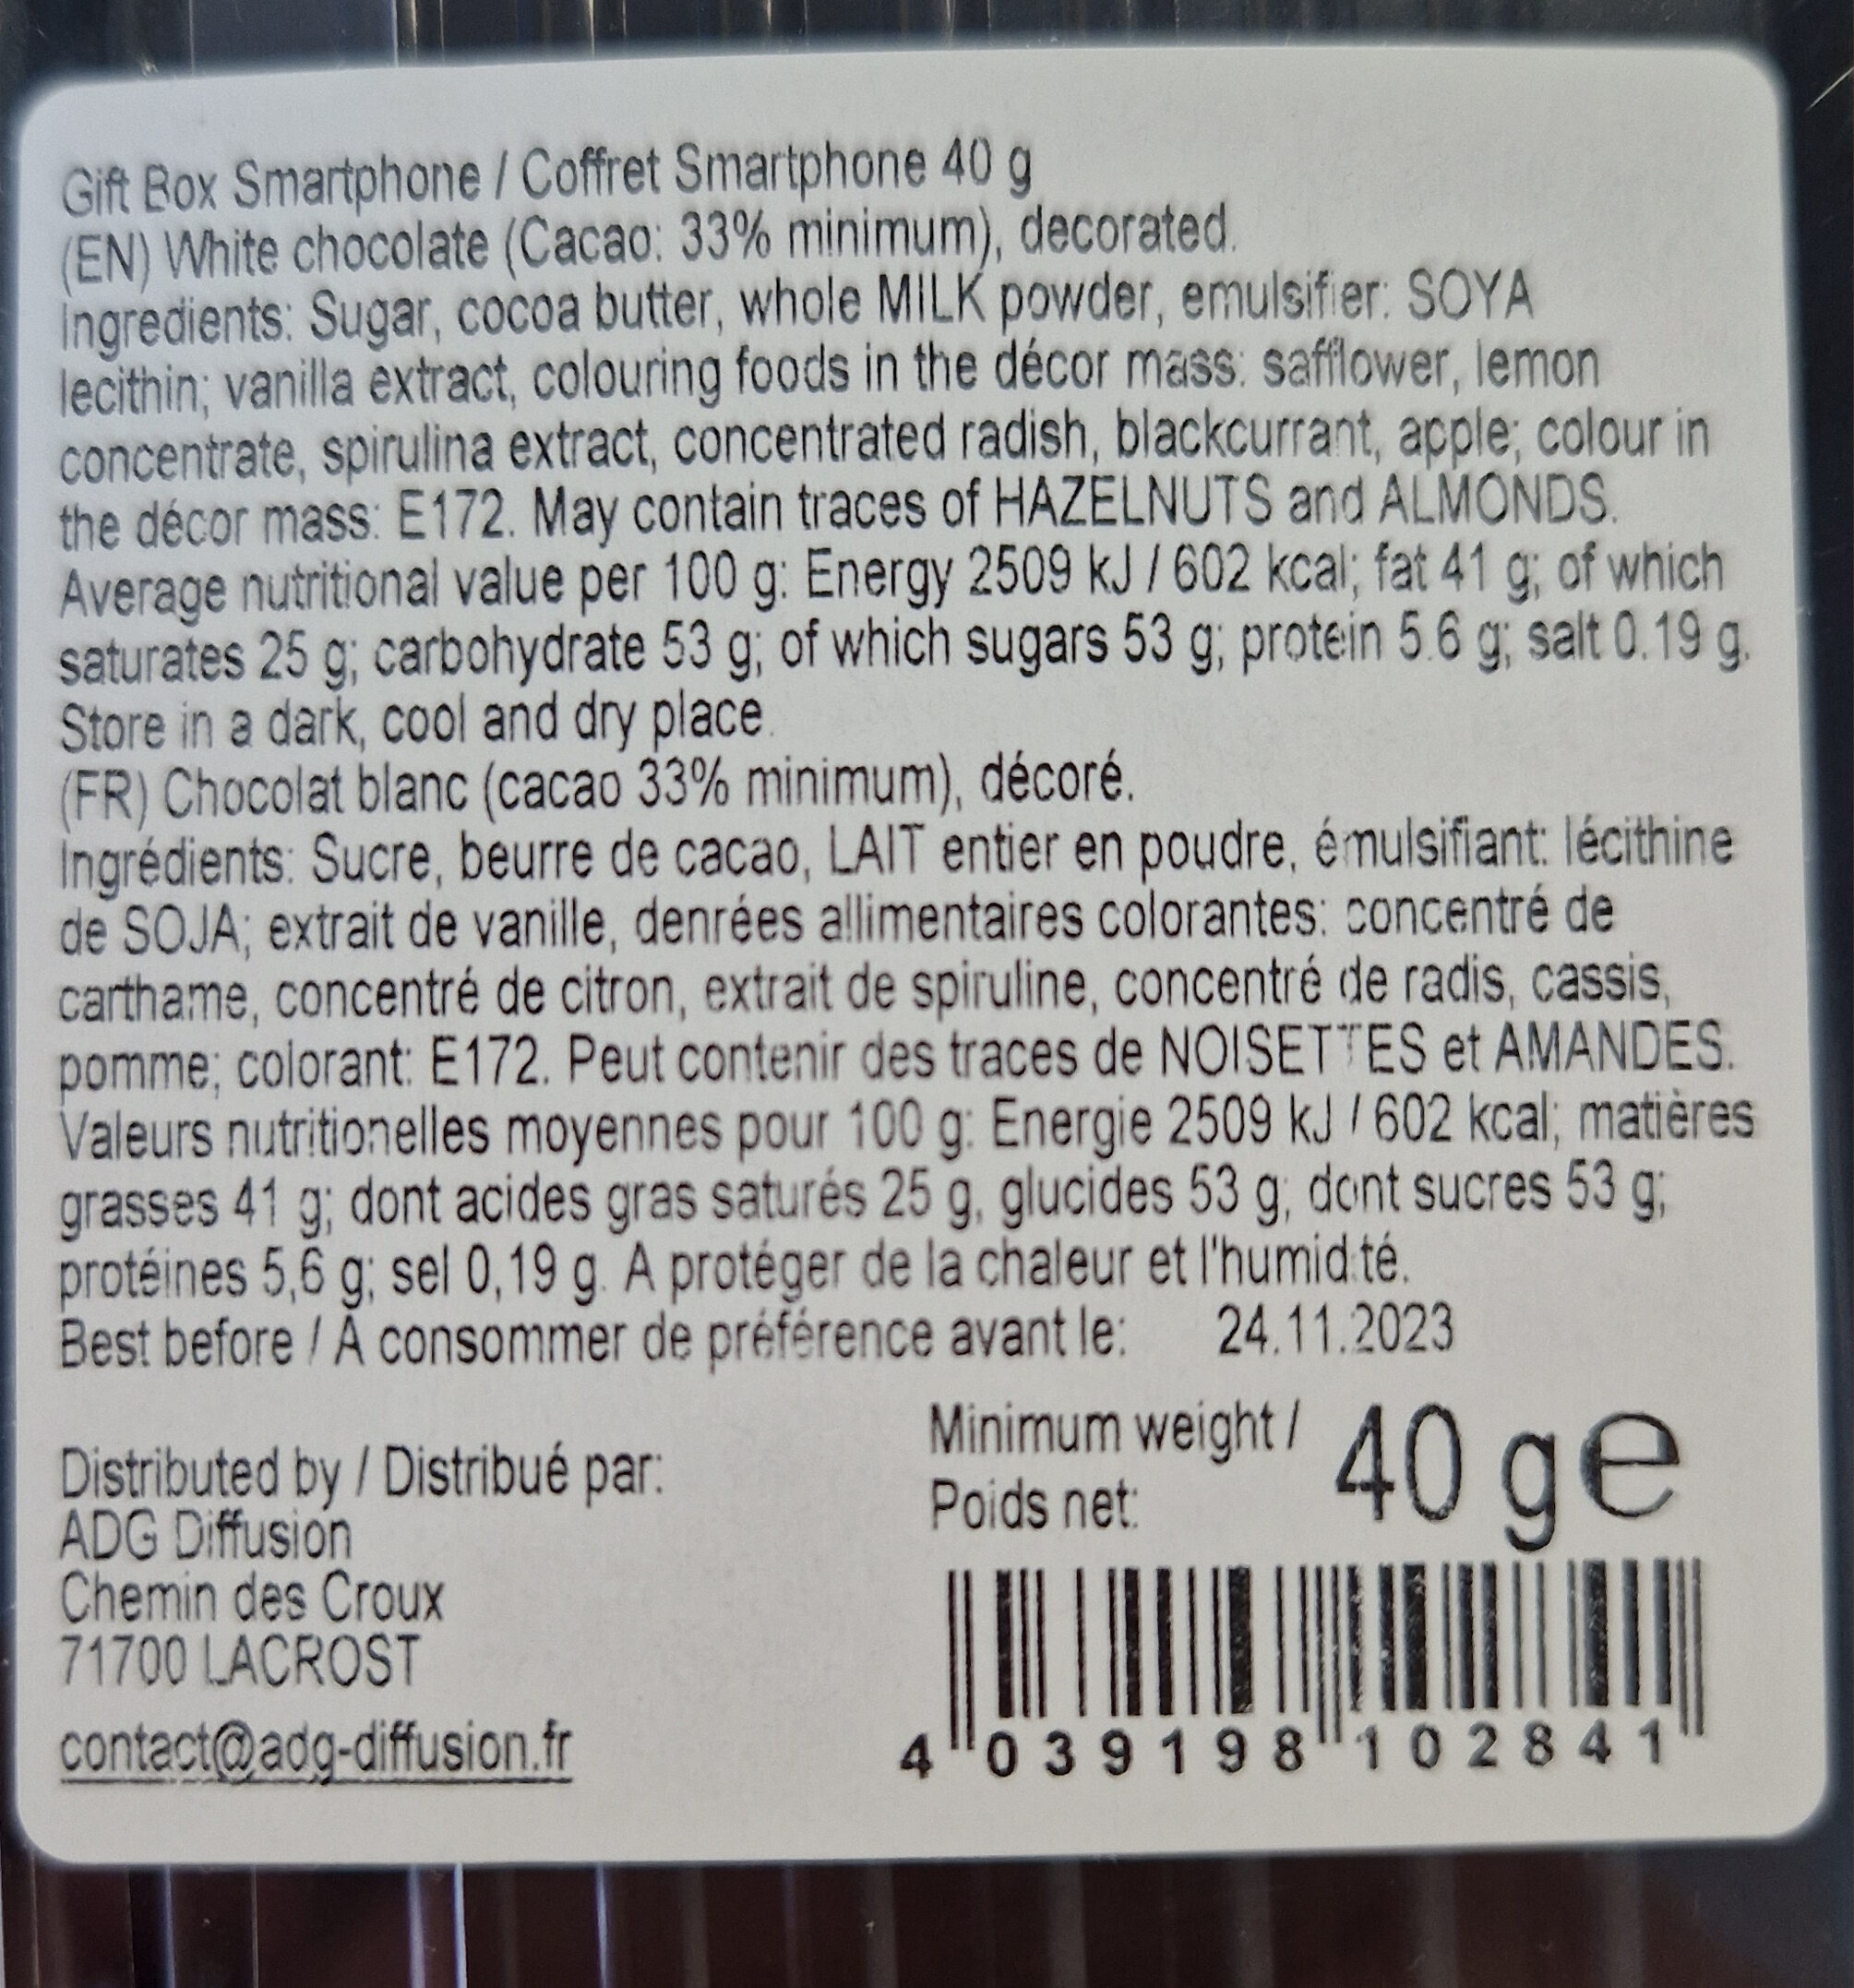 Coffret Smartphone - Ingredients - fr